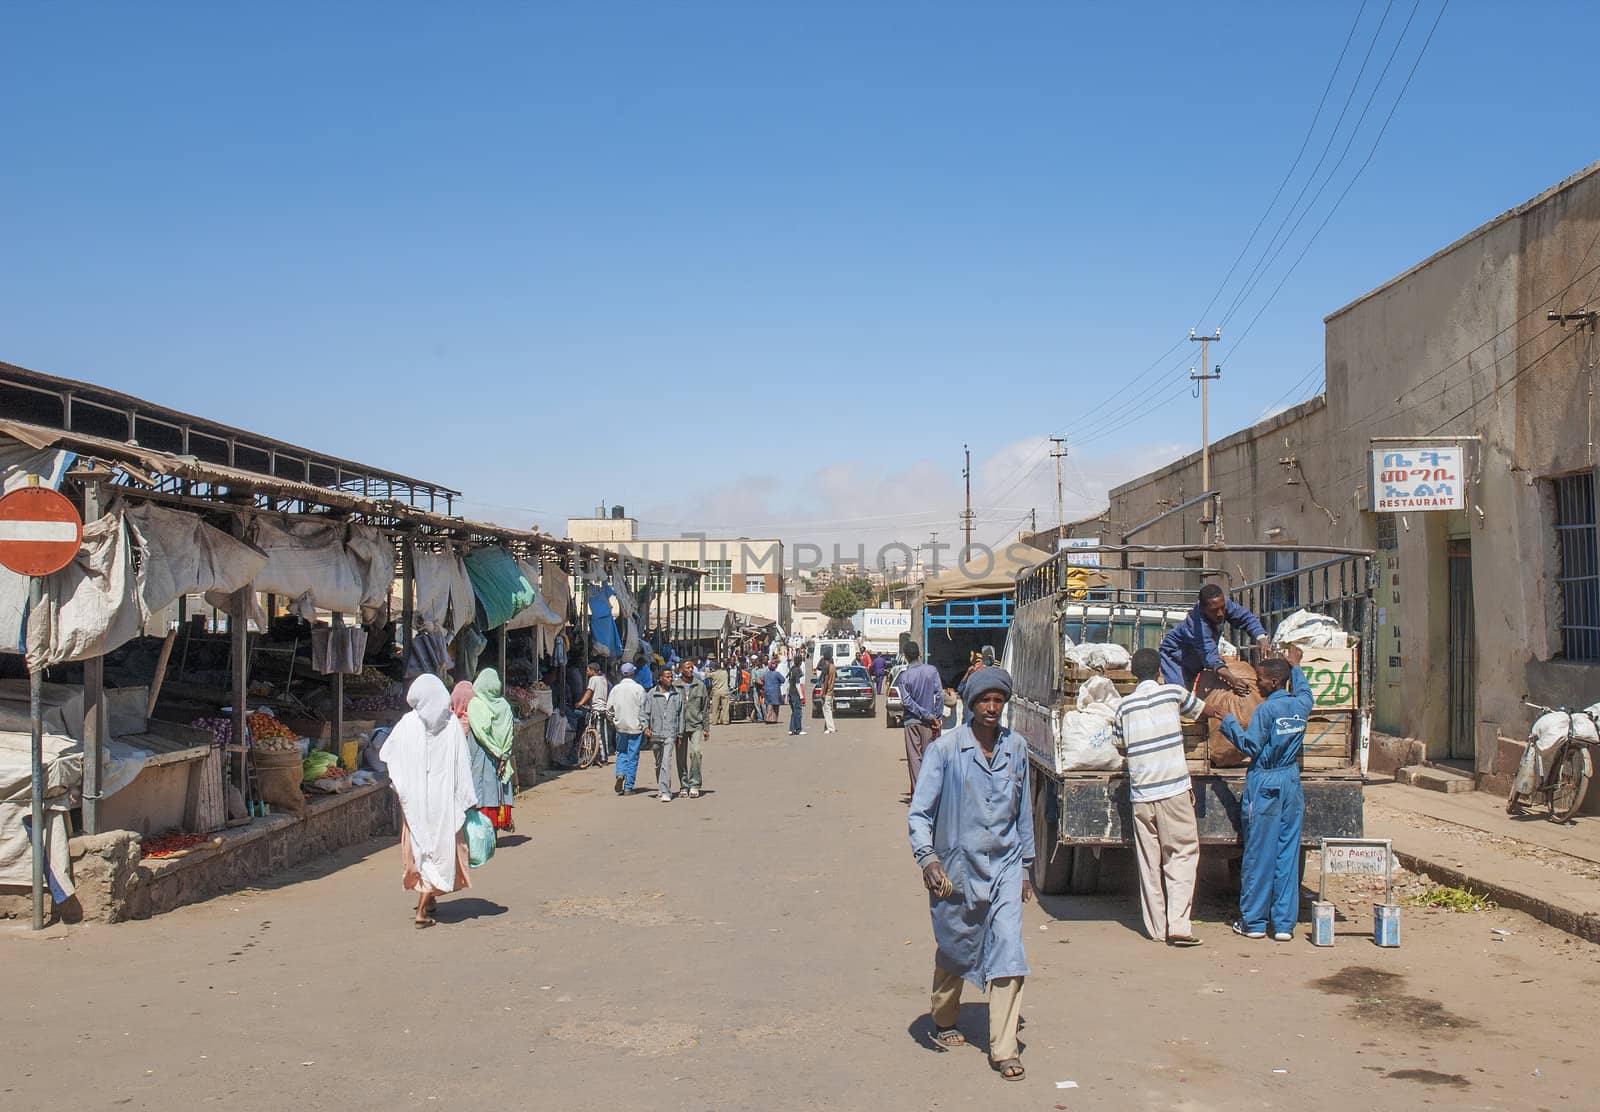 central market street in asmara eritrea